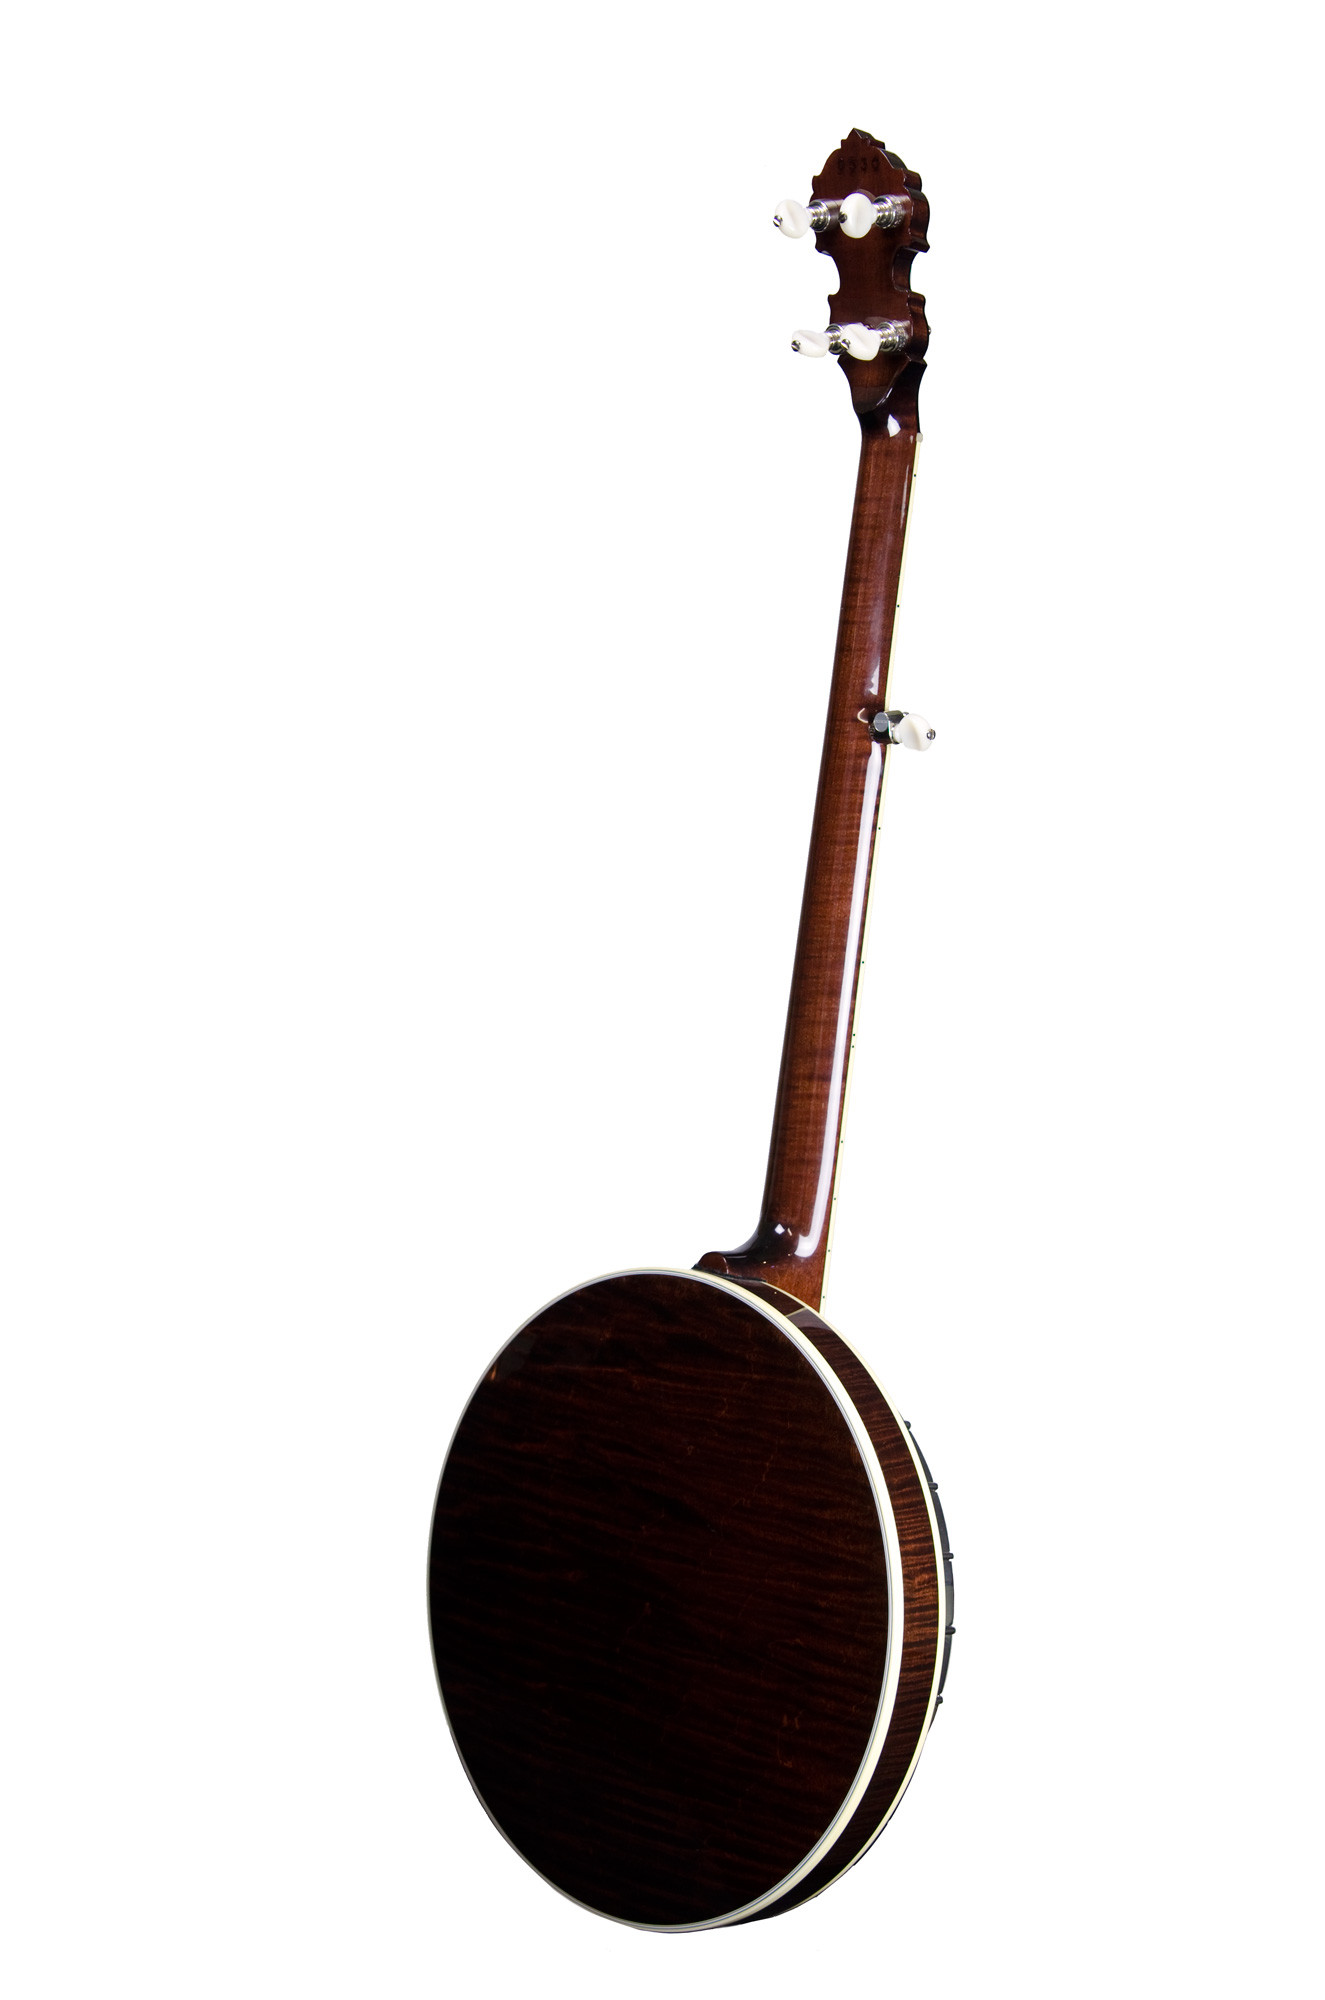 Deering Tenbrooks Saratoga Star™ Plectrum Banjo